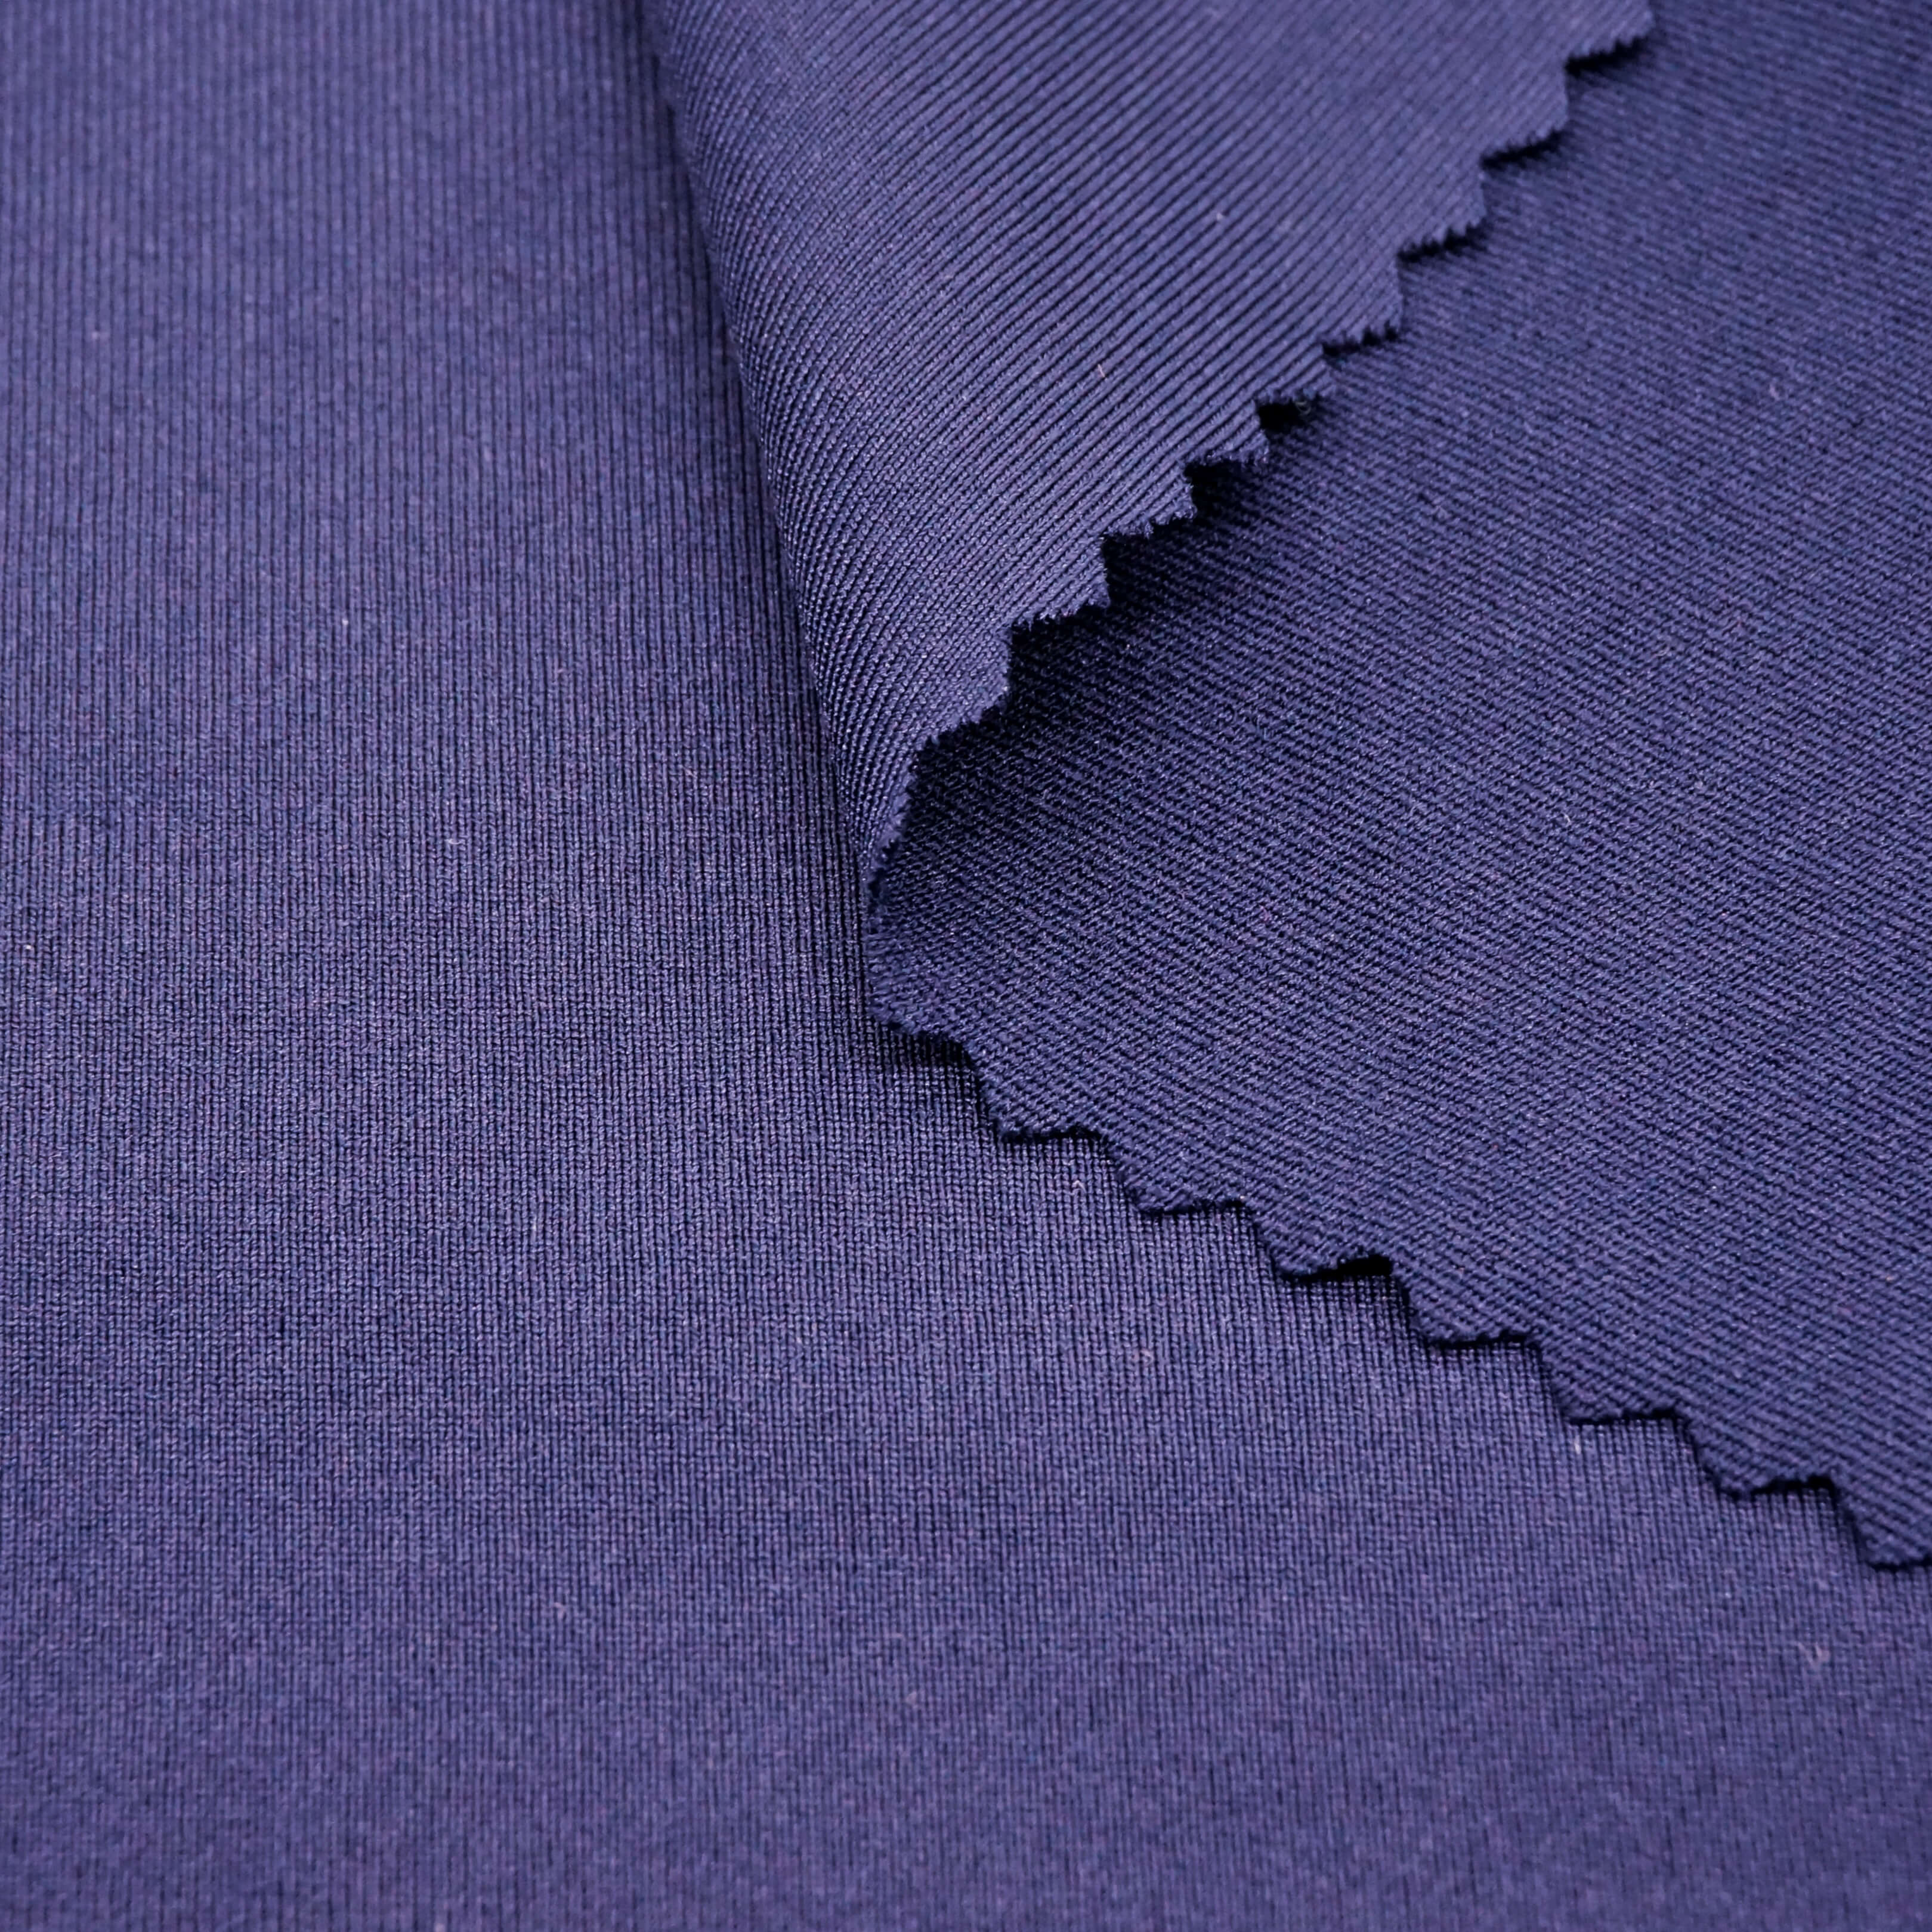 92%Polyester 8%Spandex Jacquard Stretch Fabric